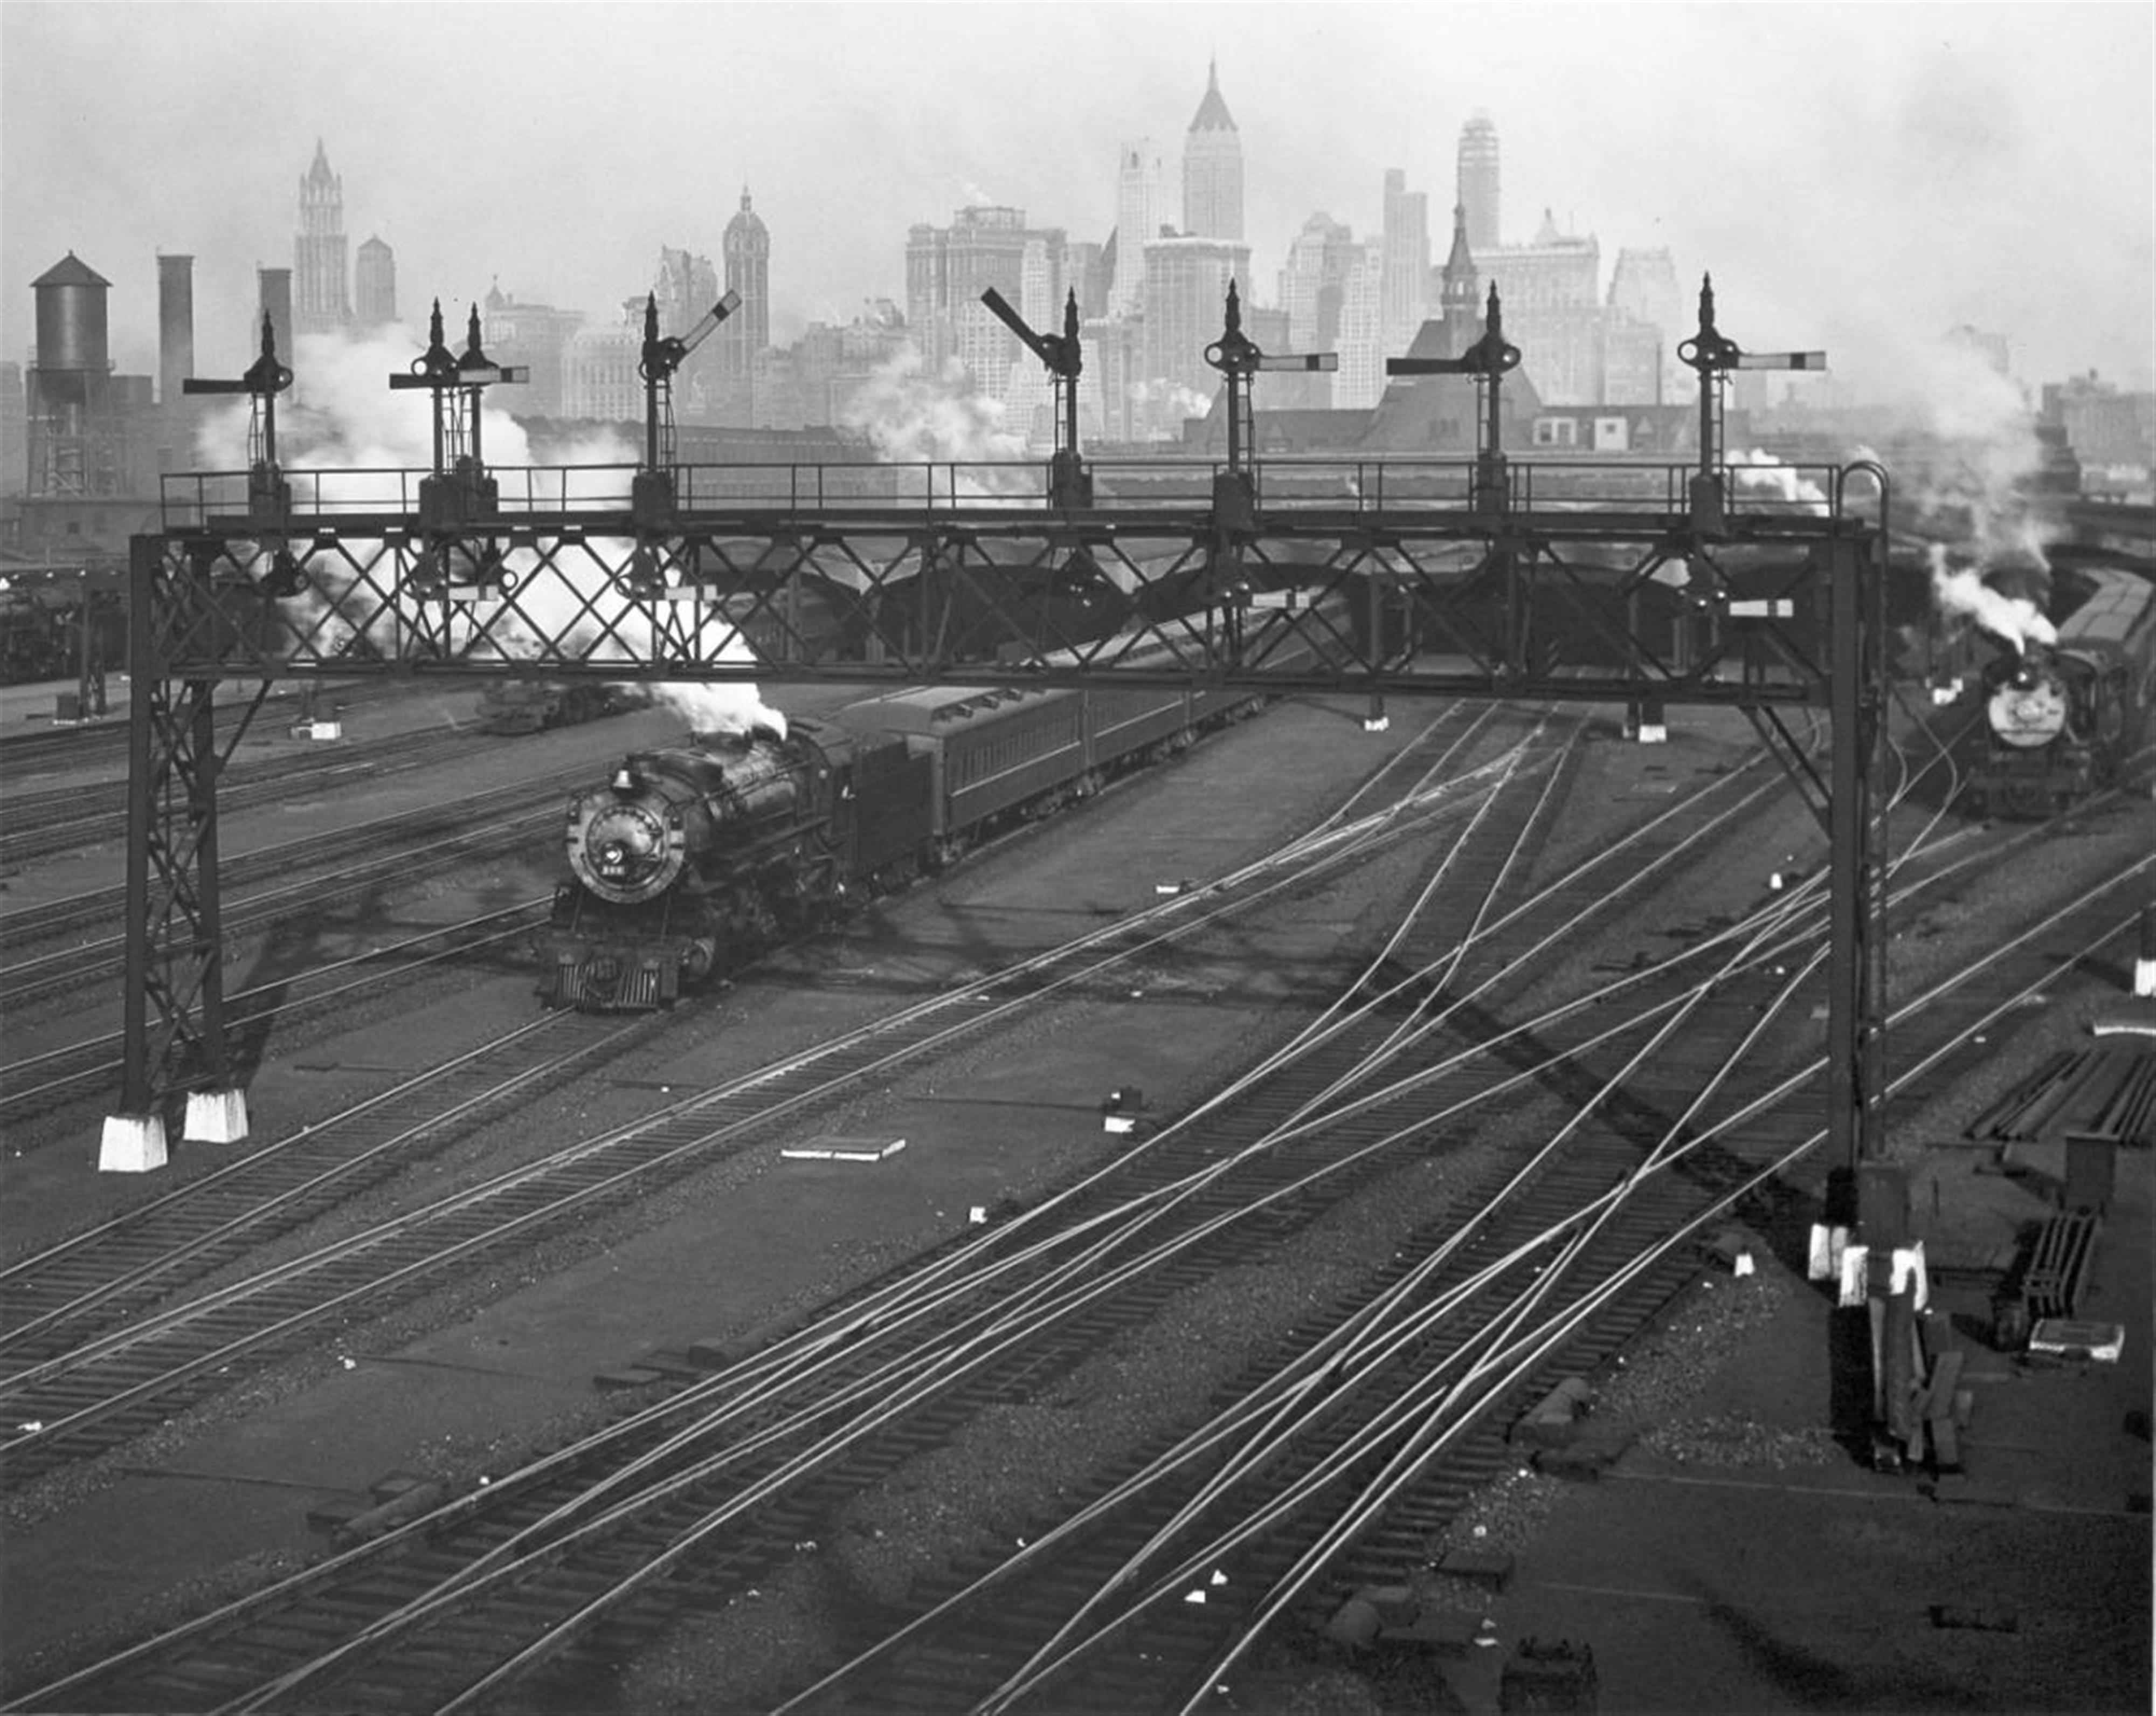 Berenice Abbott - HOBOKEN RAILROAD YARDS LOOKING TOWARDS MANHATTAN, NEW JERSEY - image-1